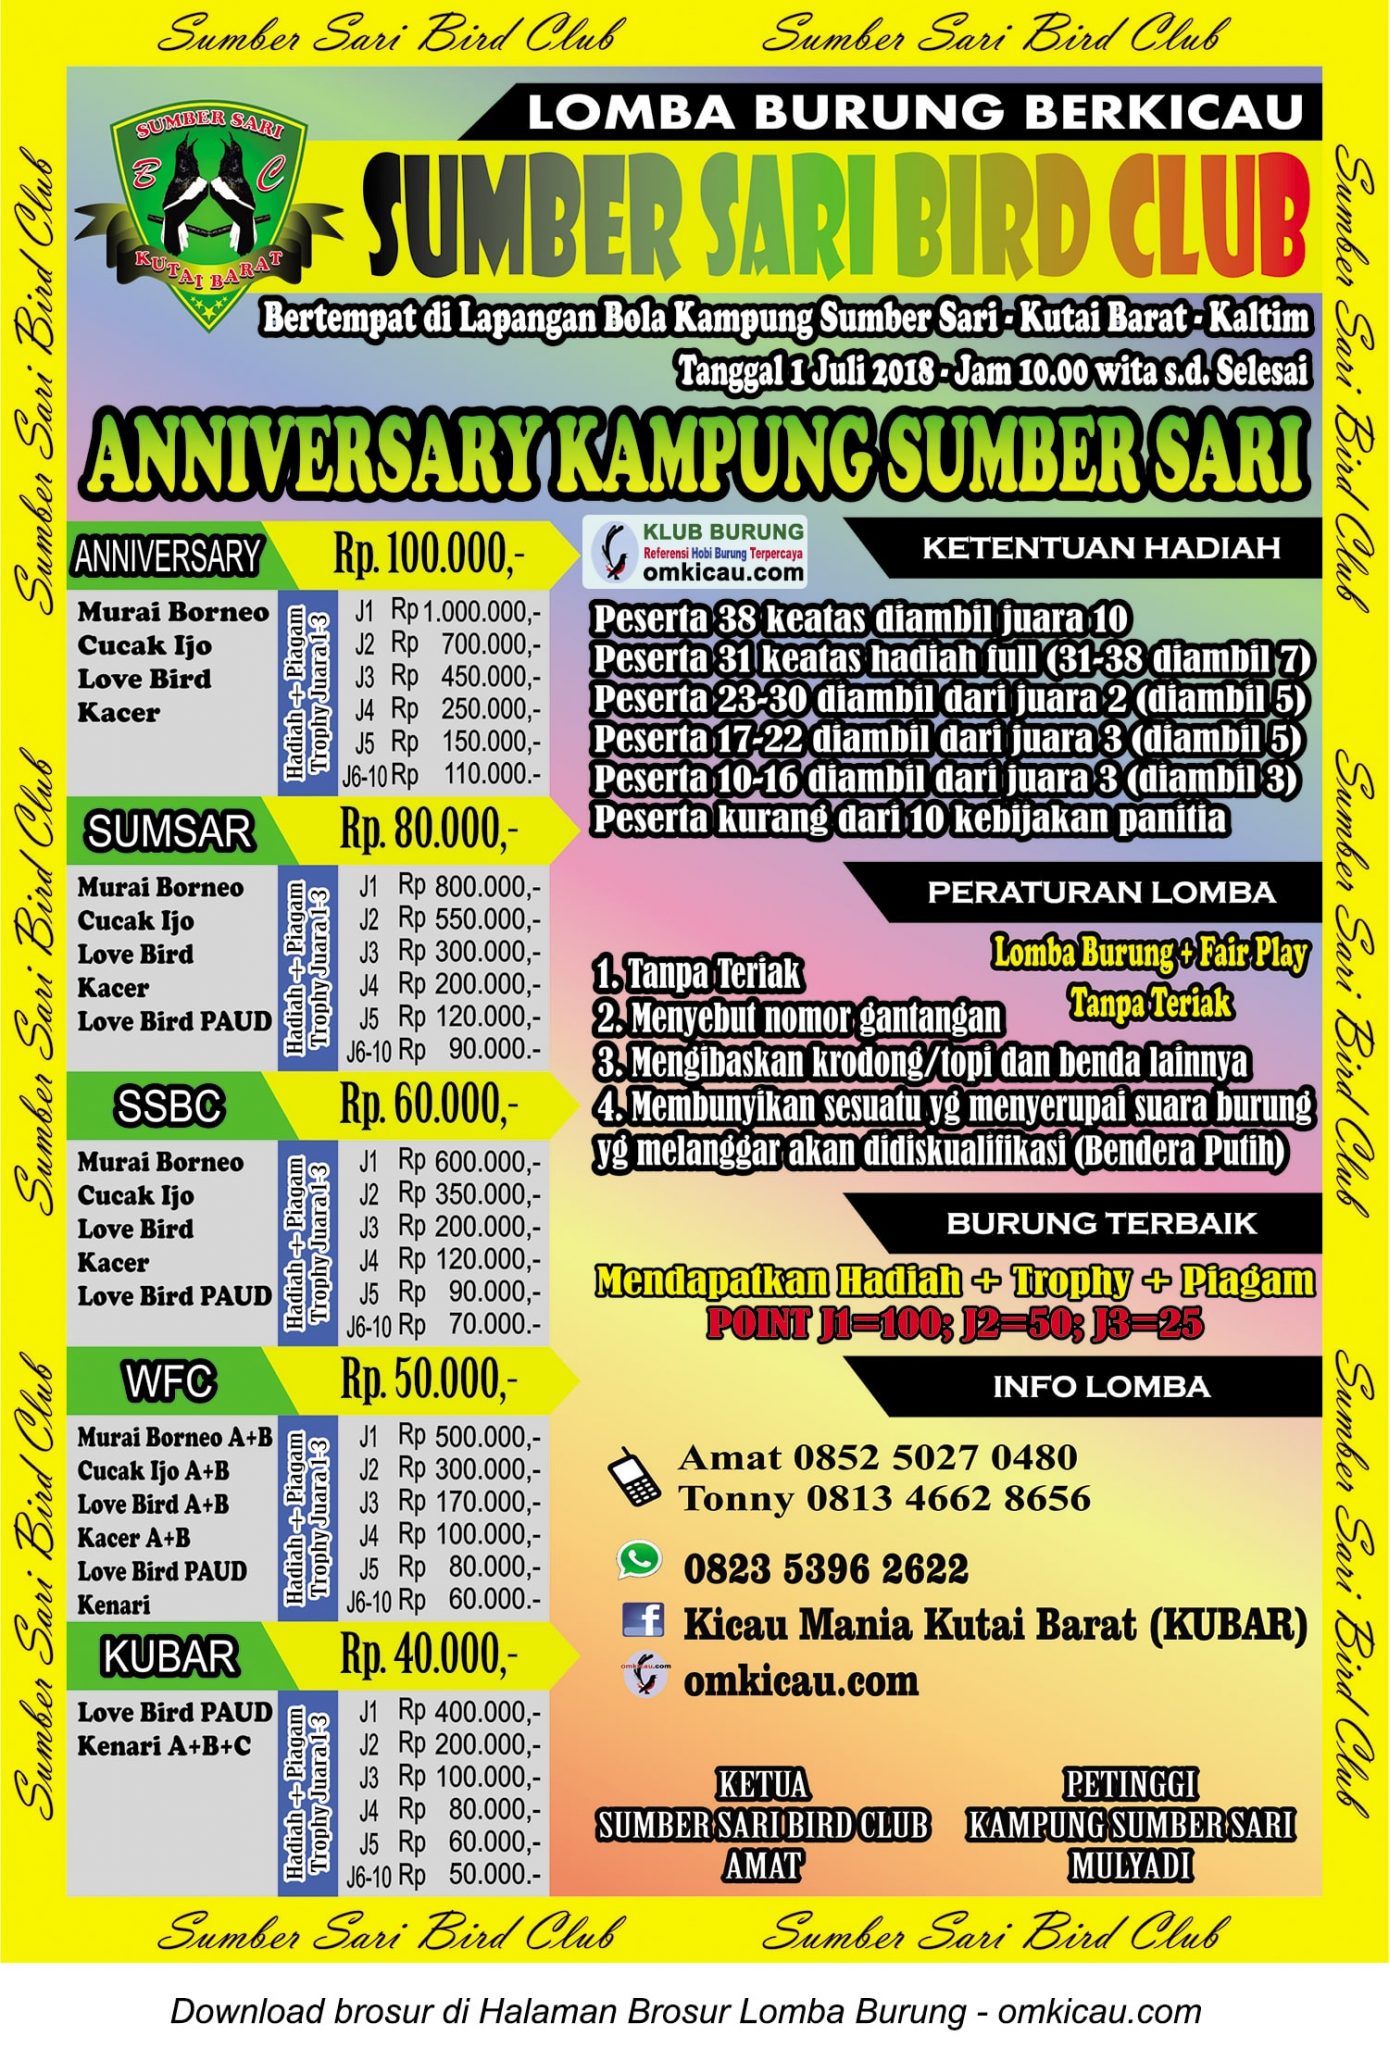 Anniversary Kampung Sumber Sari